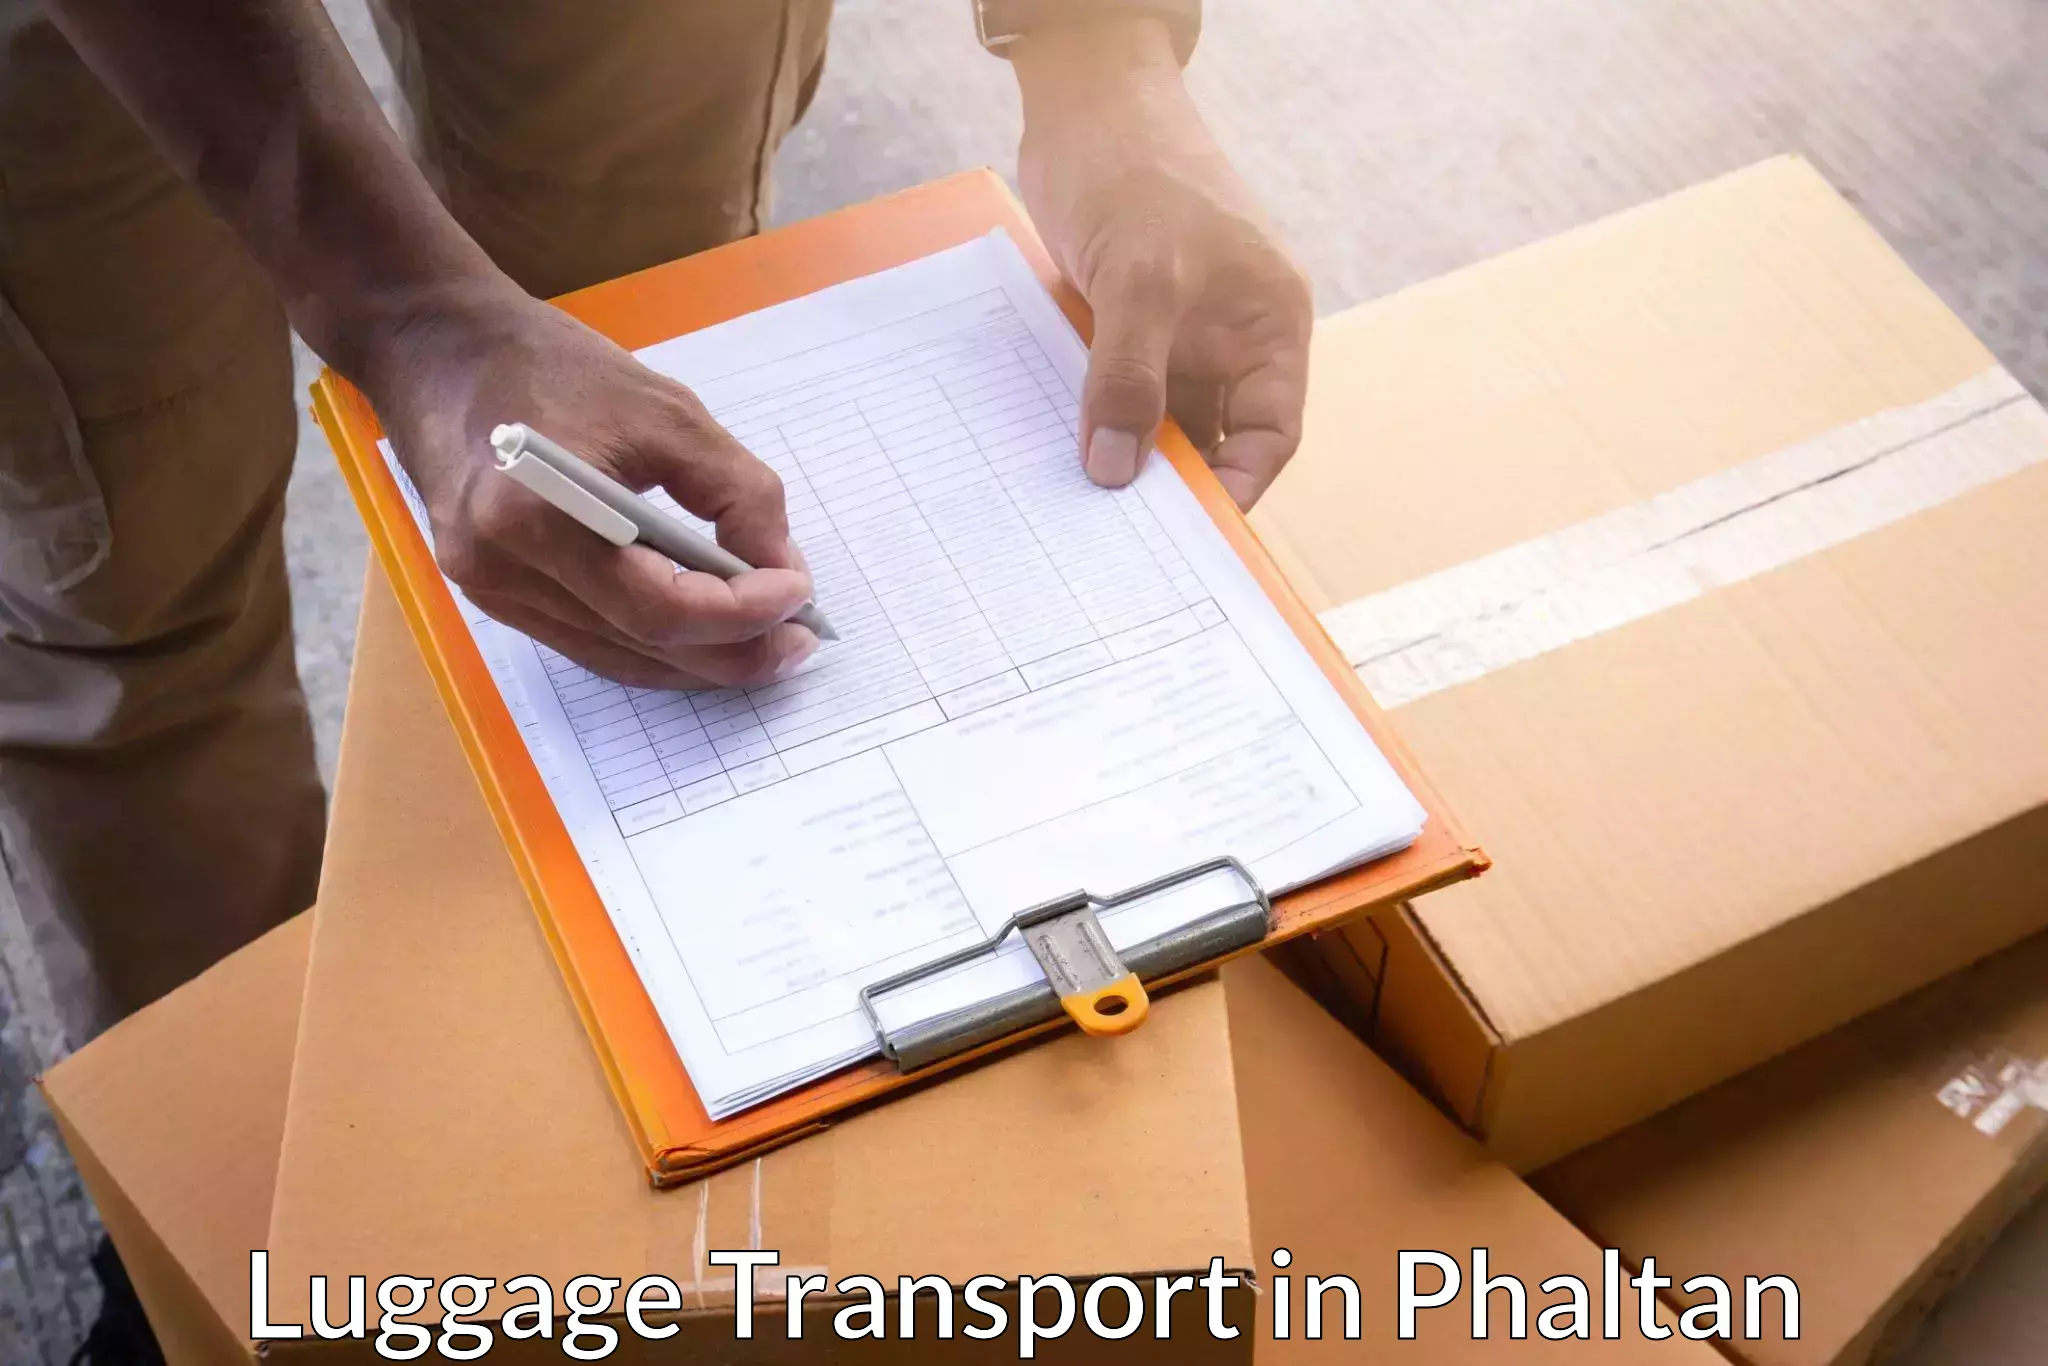 Luggage transport consultancy in Phaltan